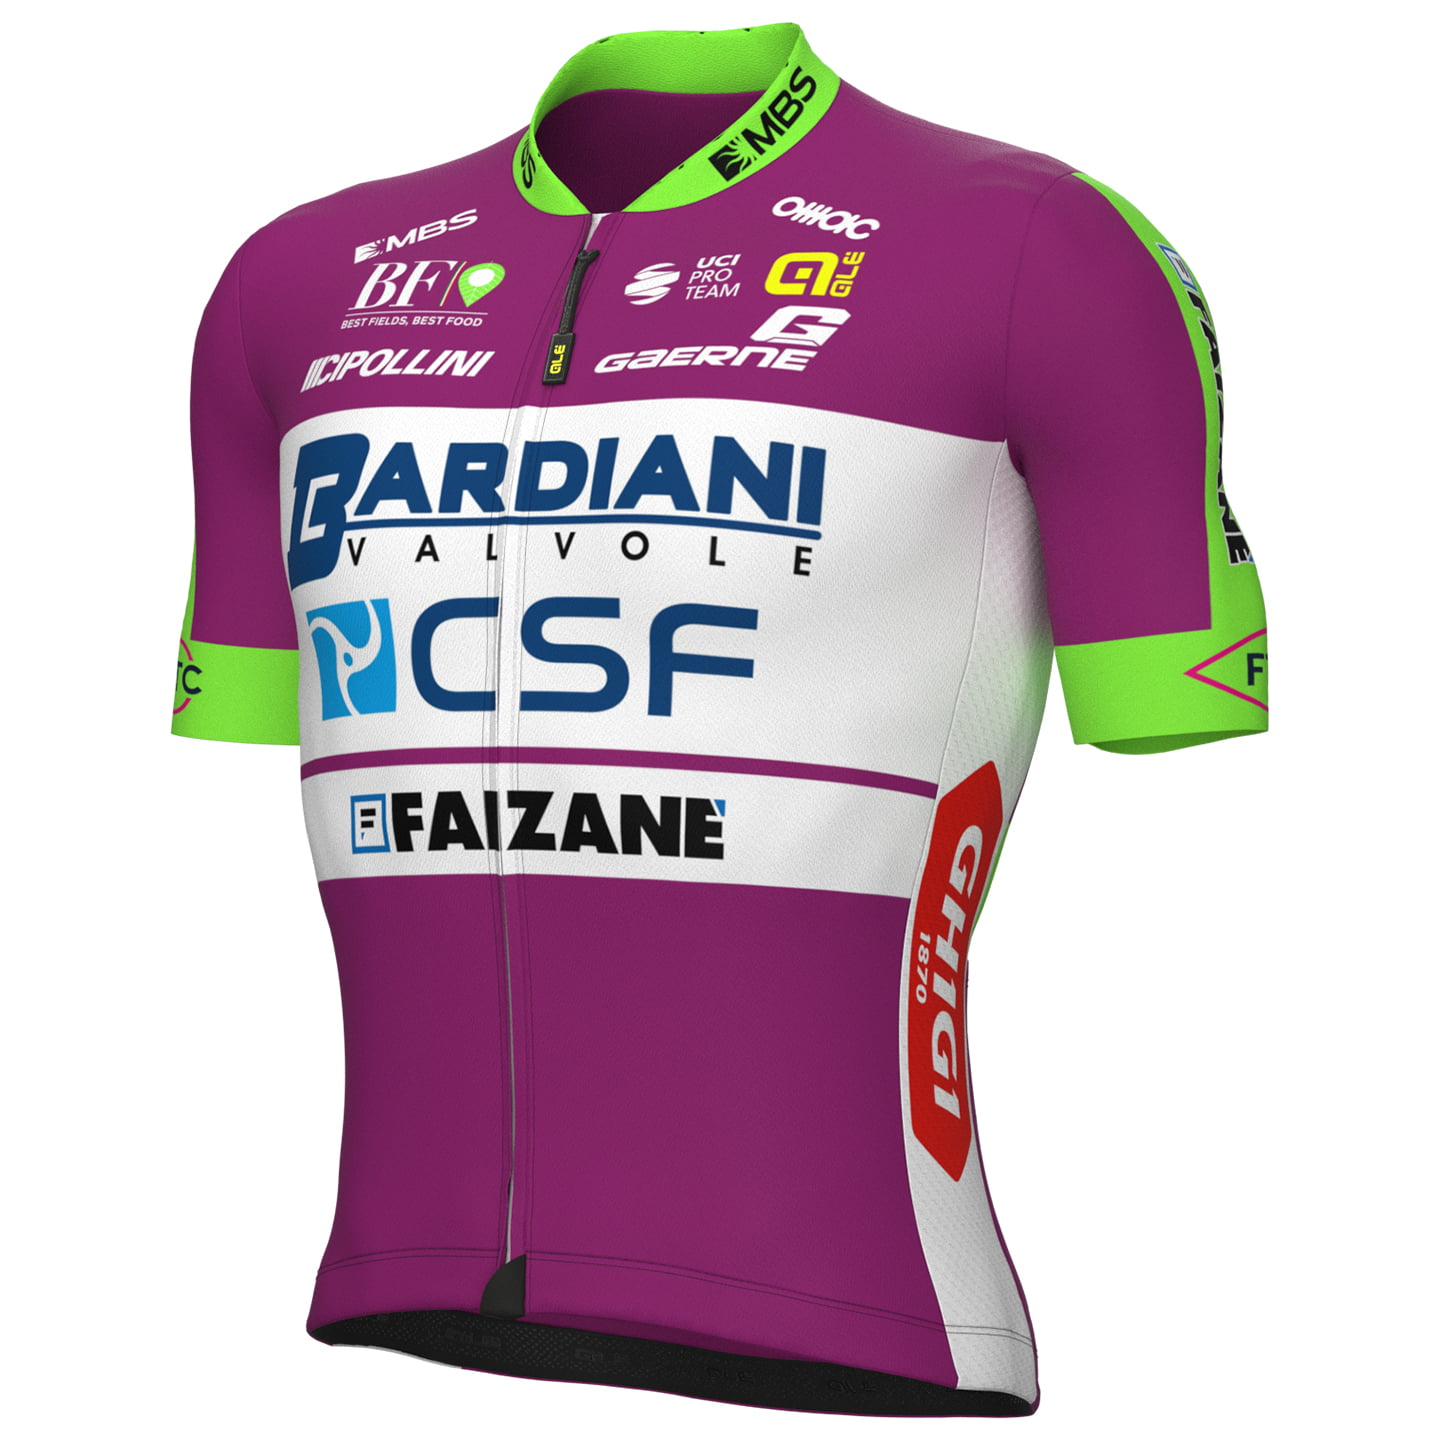 BARDIANI CSF FAIZANE 2022 Short Sleeve Jersey, for men, size M, Cycle jersey, Cycling clothing